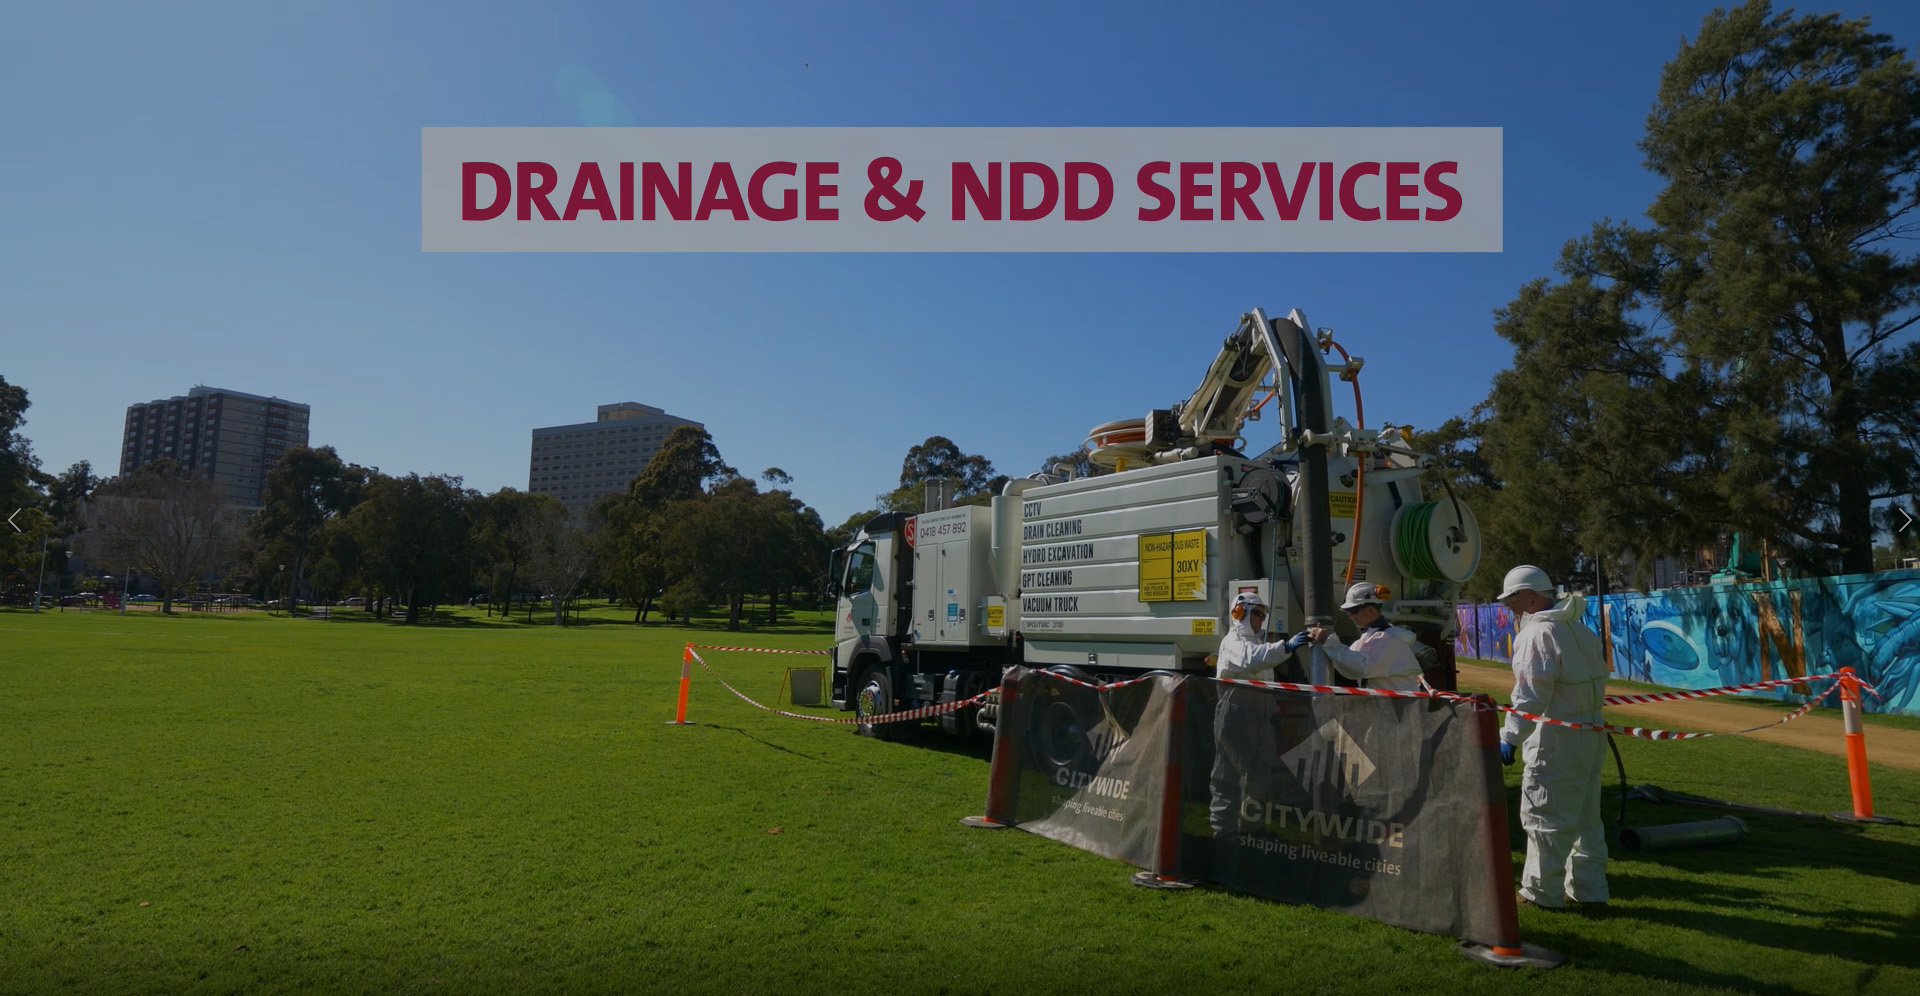 Drainage NDD Showcase services banner